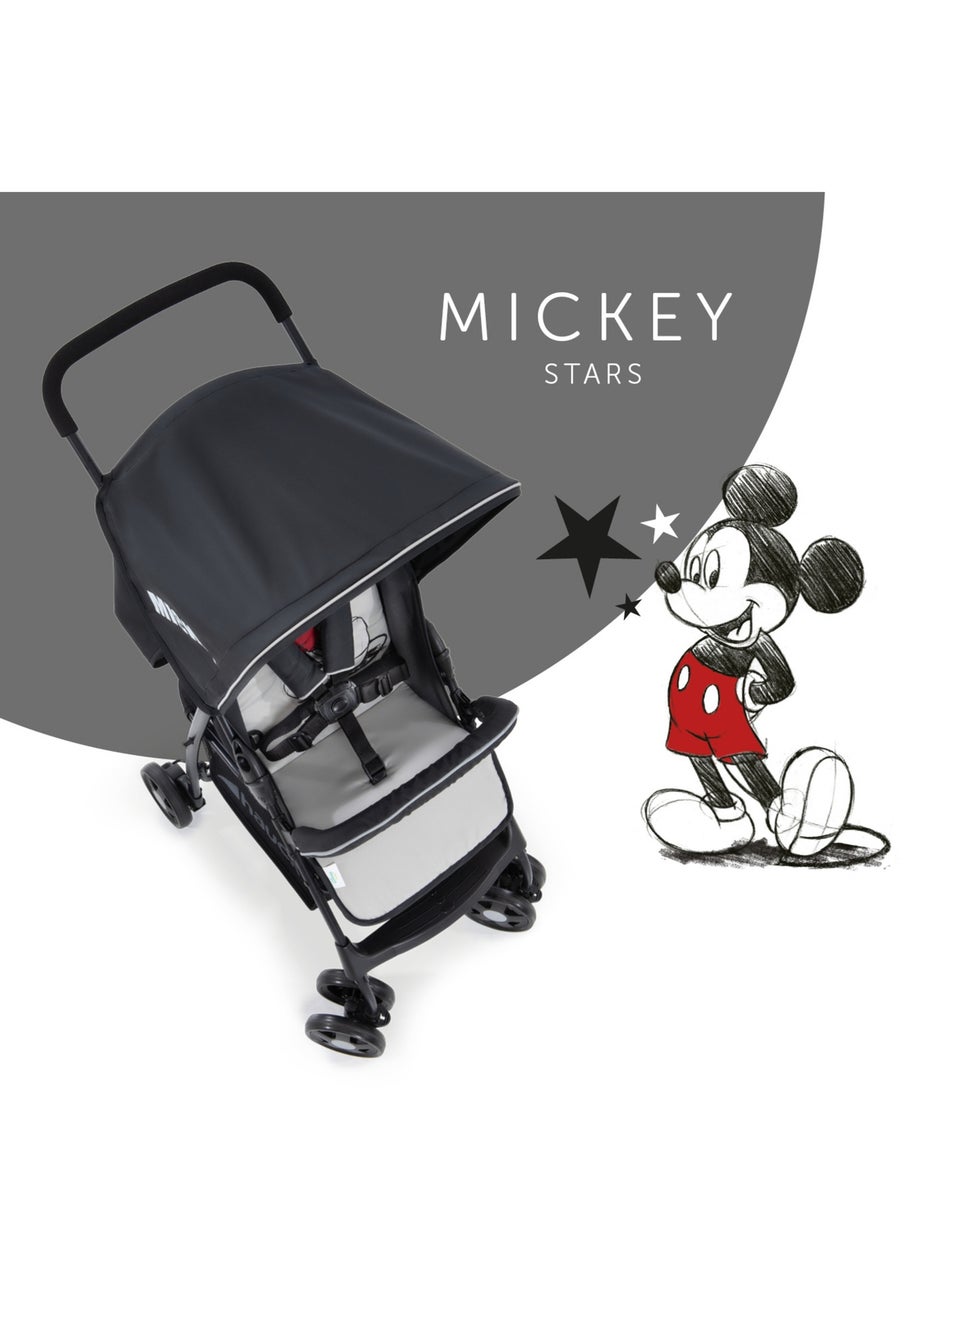 Hauck Mickey Stars Sport Pushchair